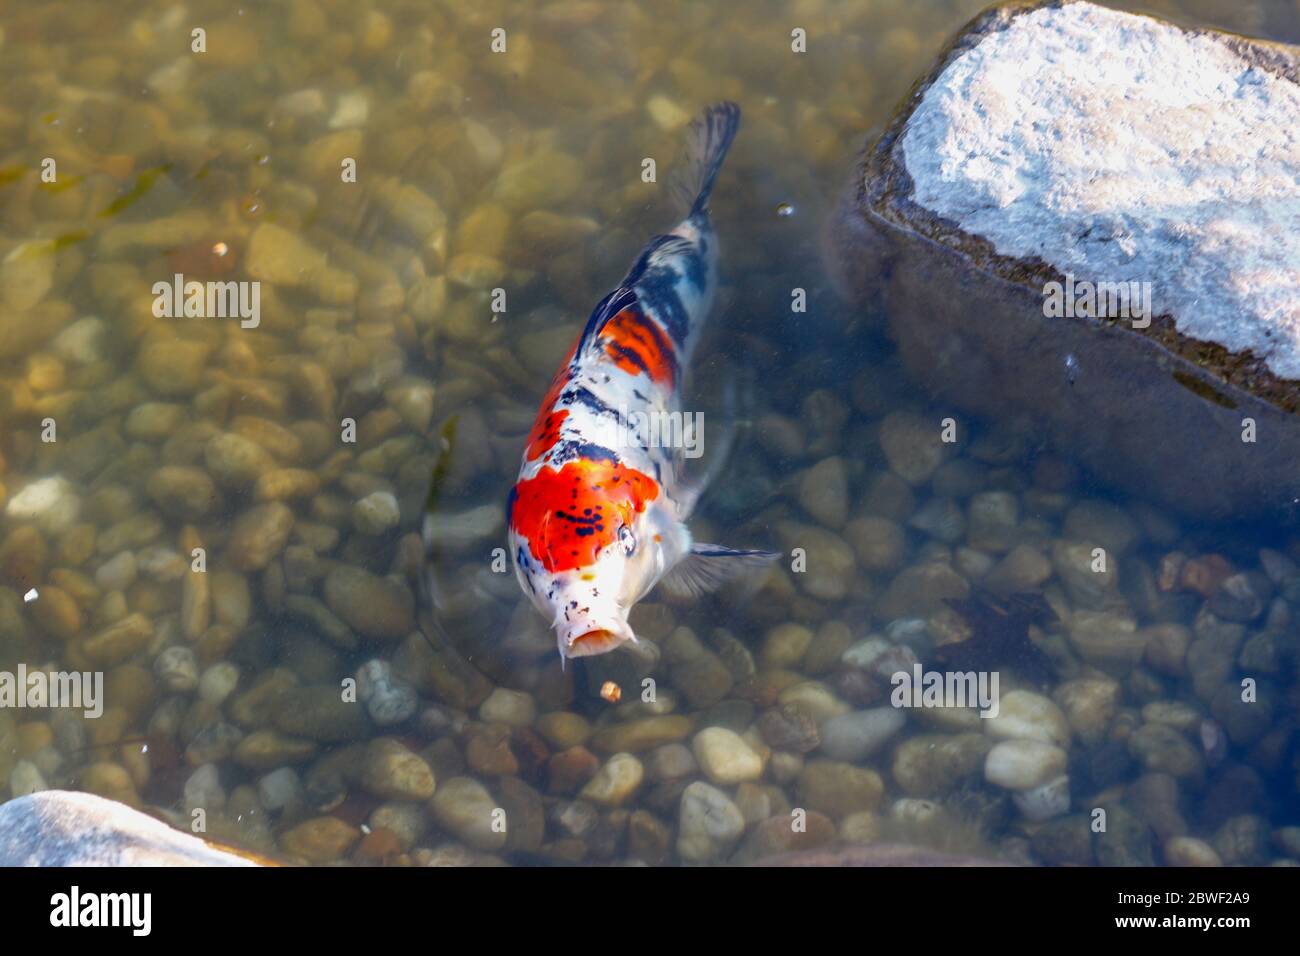 Japan fish in pond Stock Photo